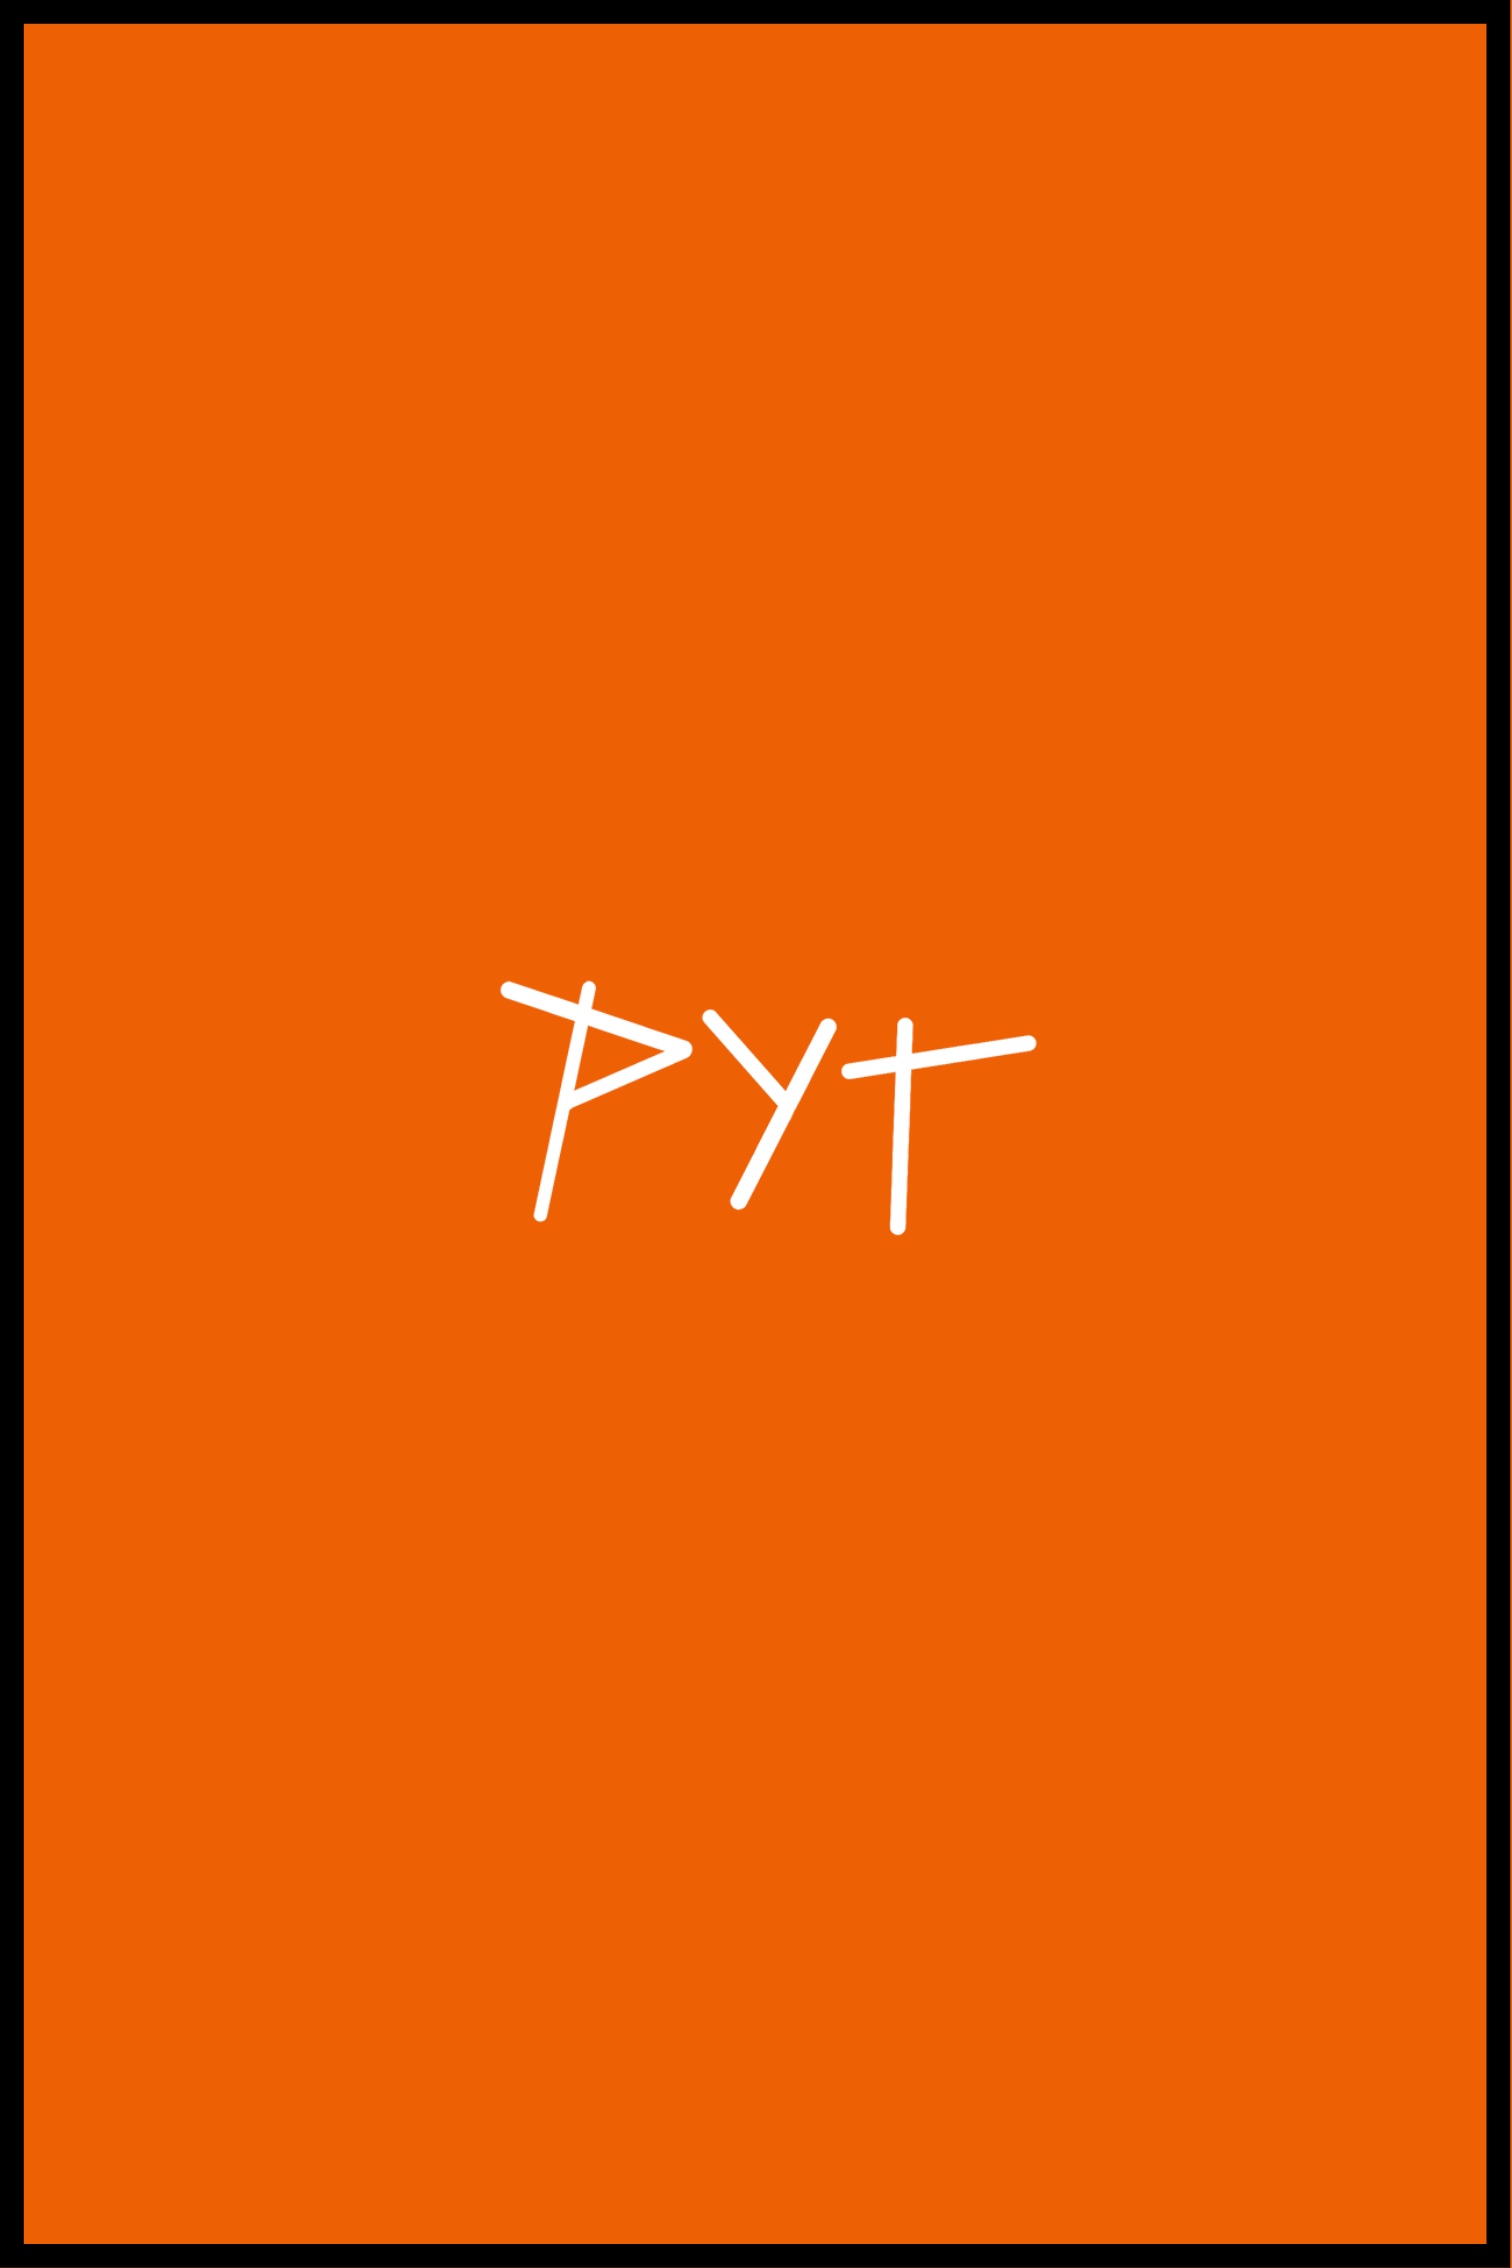 Se pyt-orange plakat - 70x100 cm hos SimplyPoster.dk